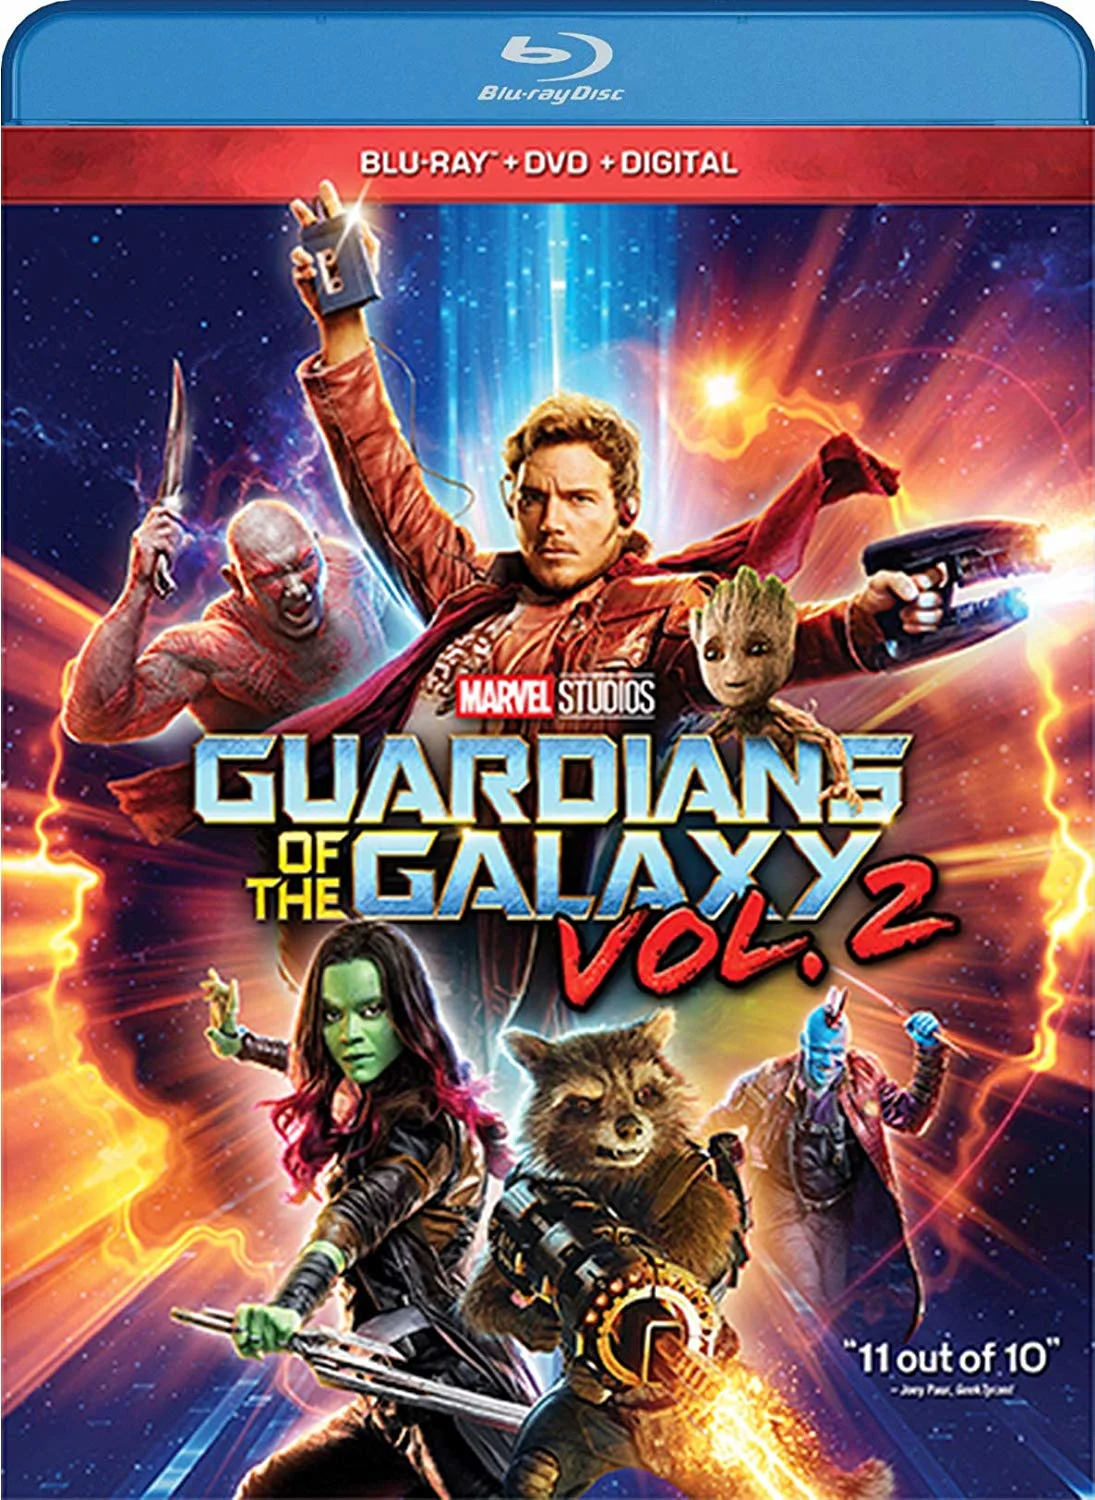 Guardians of the Galaxy Vol. 2 (Blu-ray) on MovieShack